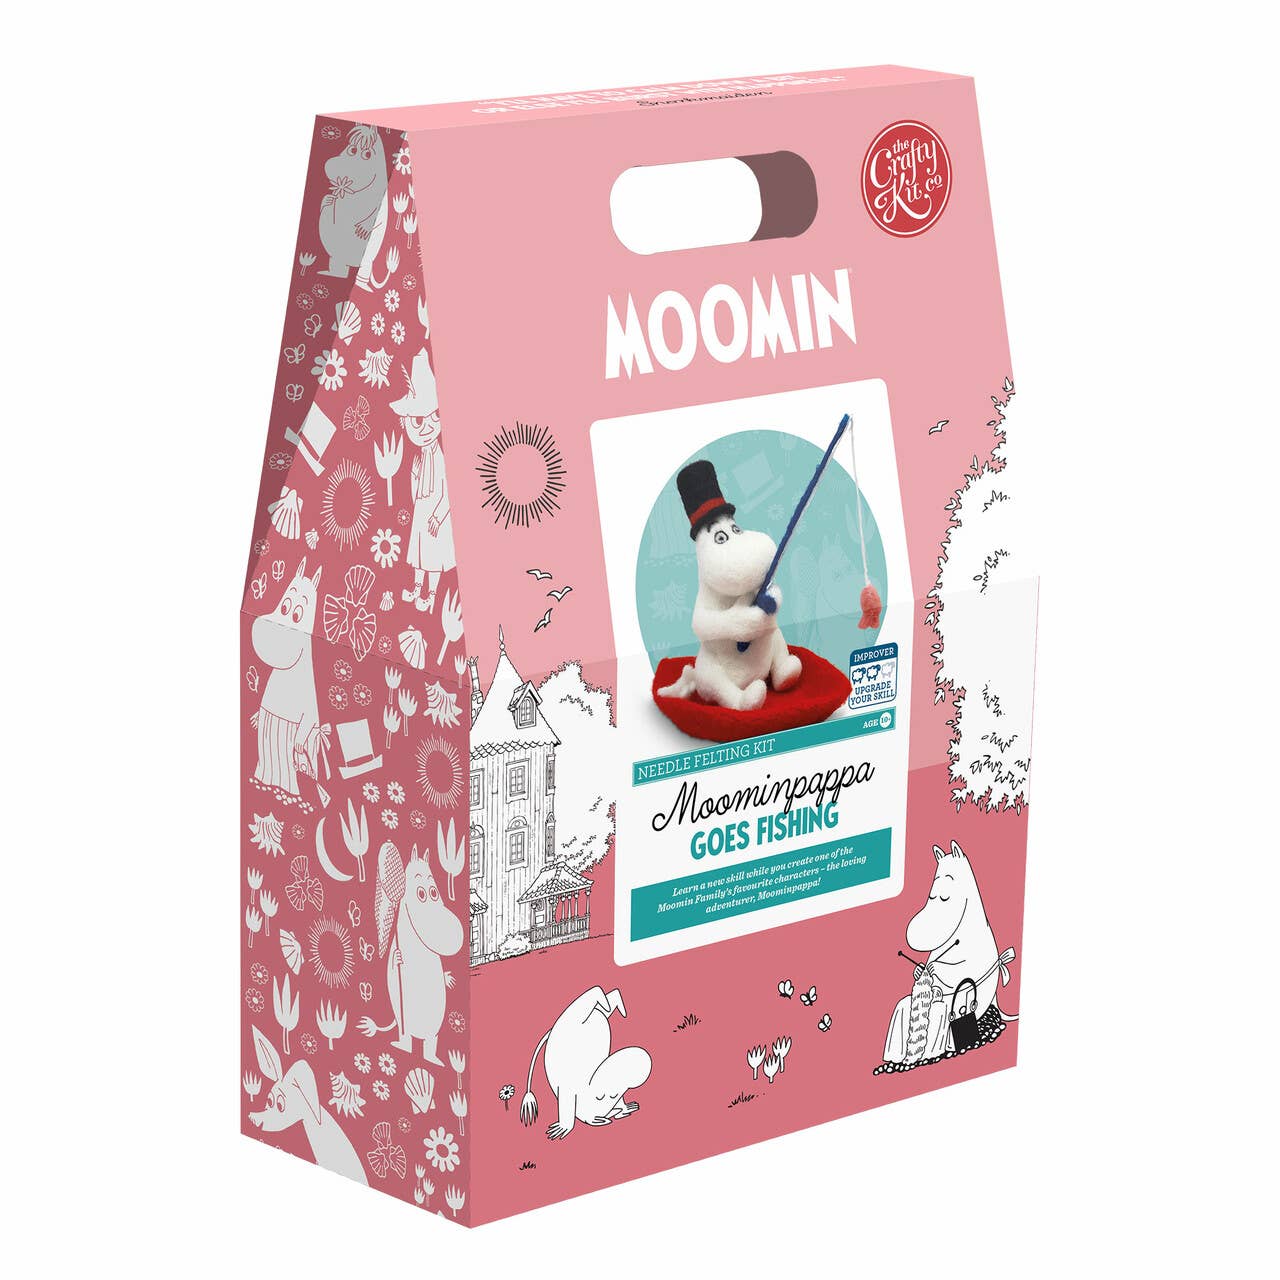 Moominpappa Goes Fishing Needle Felting Kit